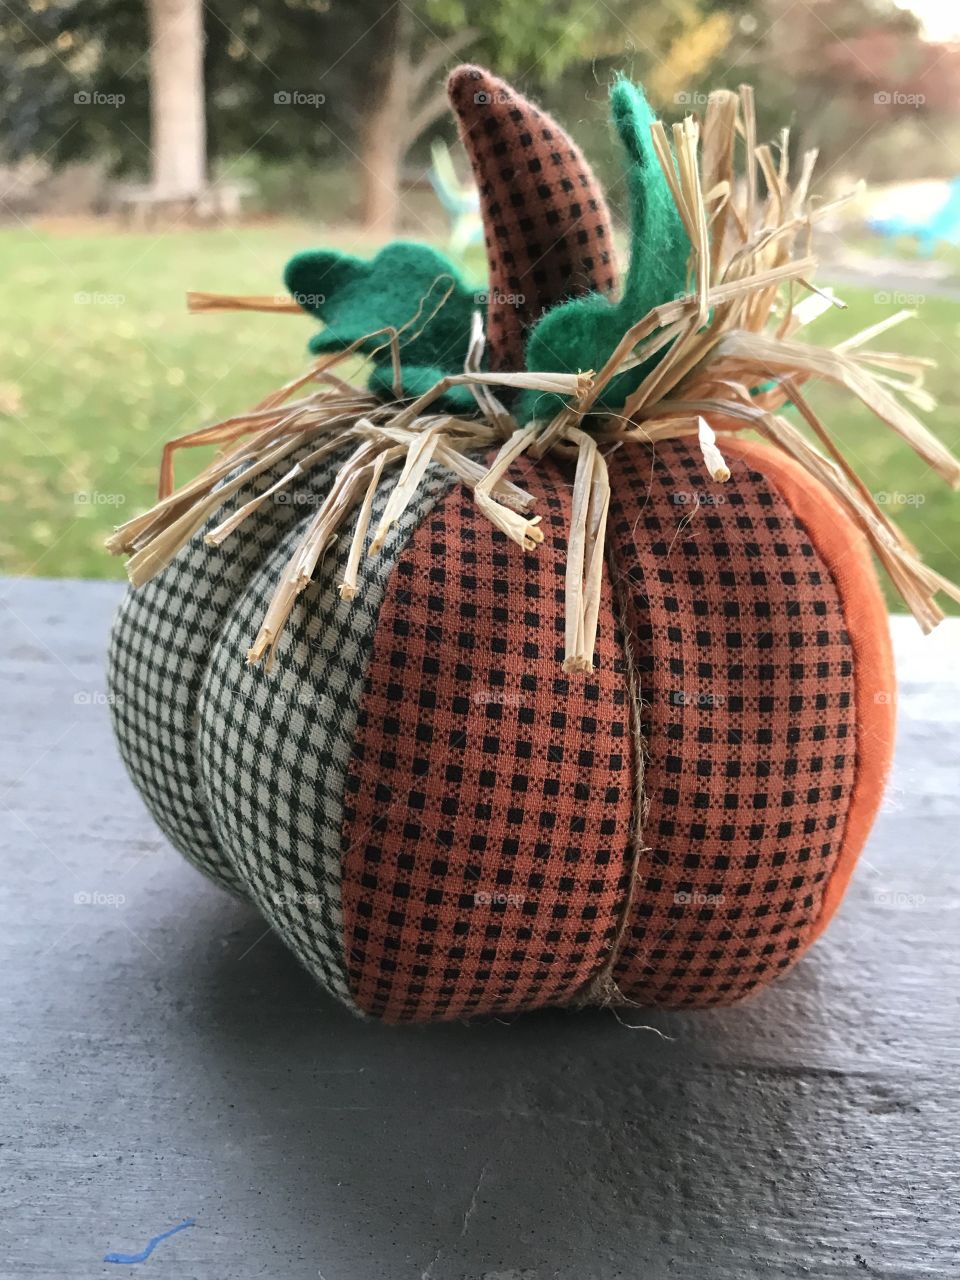 Diy crafts in the fall season 